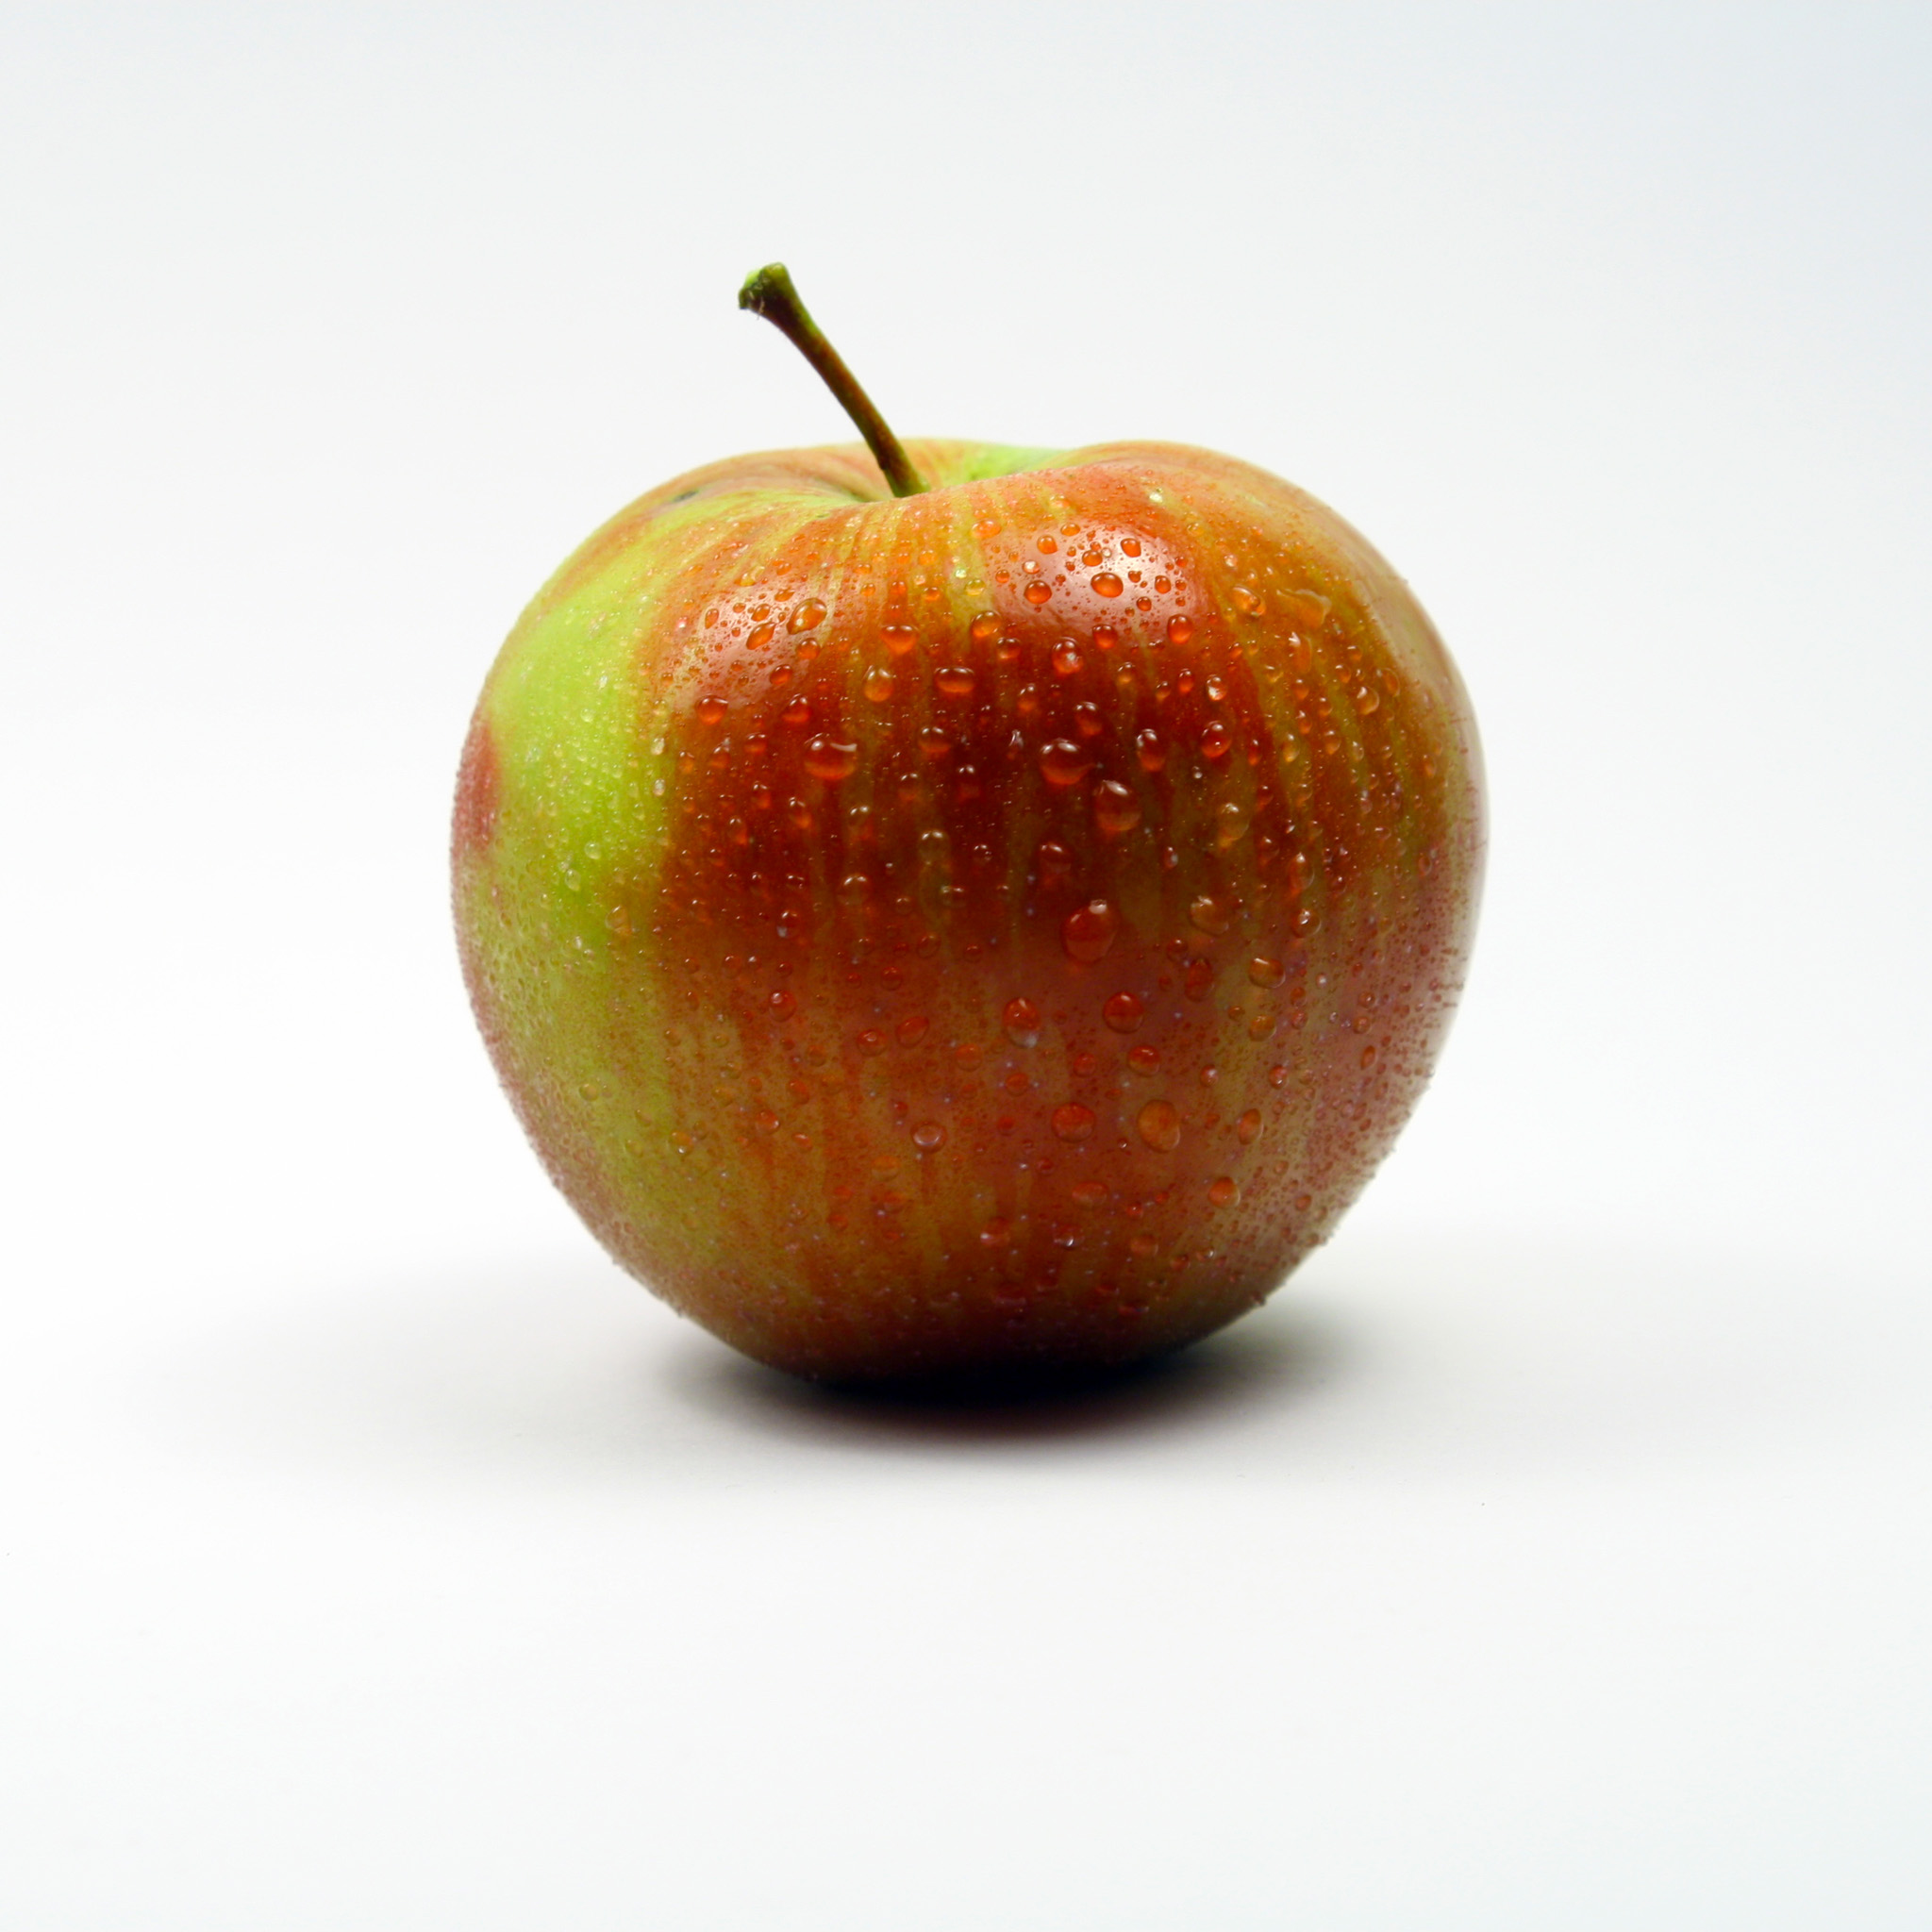 peter franz - organic apple ipad wallpaper